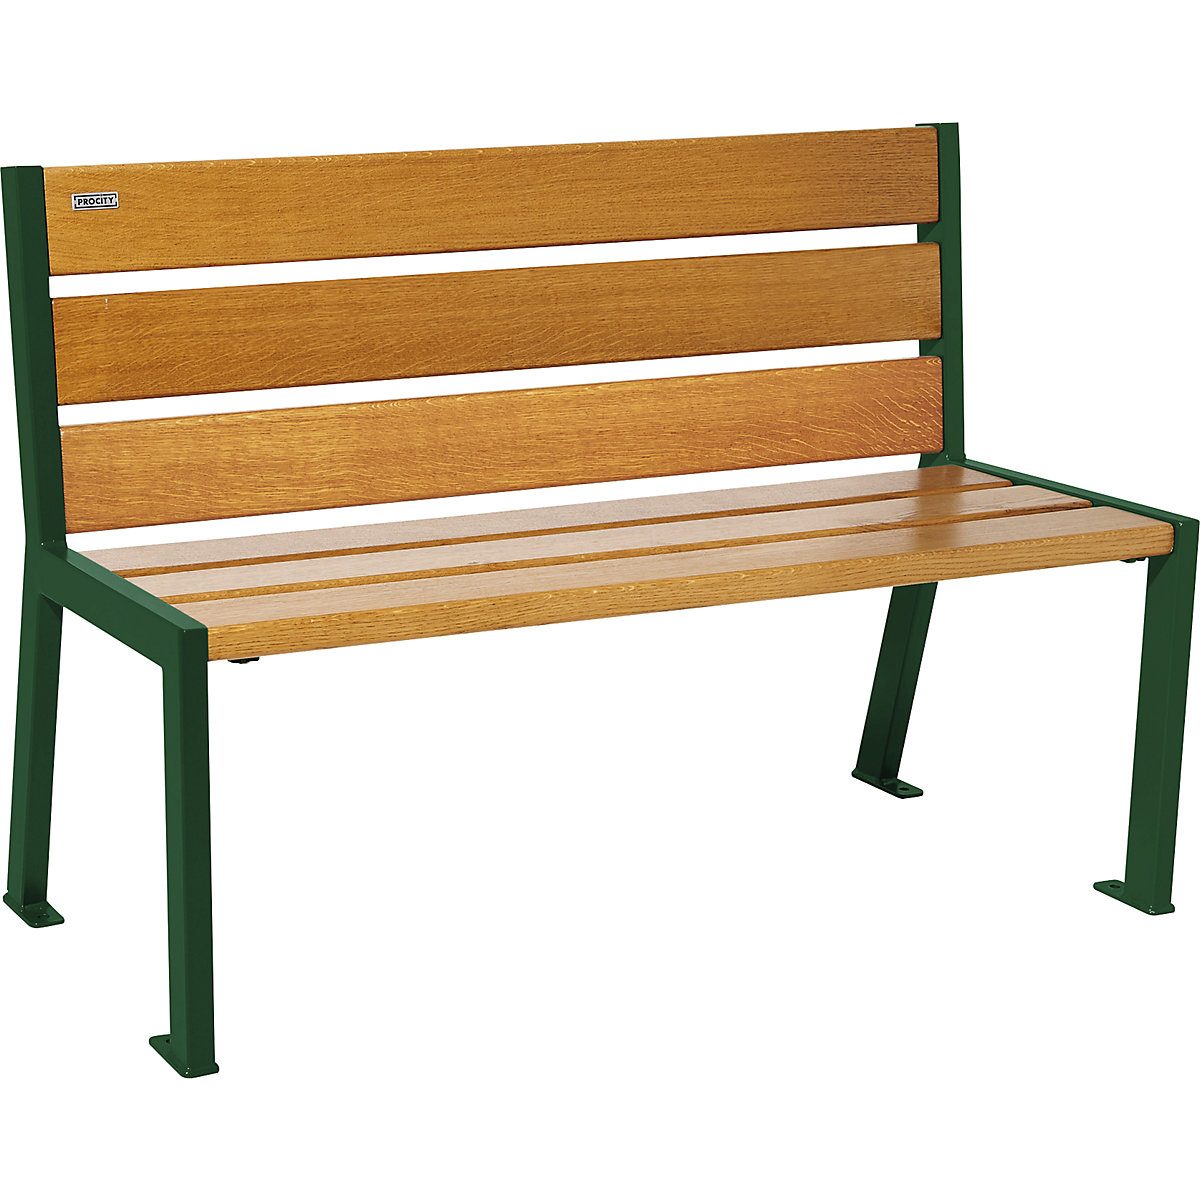 Sitzbank SILAOS® aus Holz PROCITY, mit Rückenlehne, Länge 1200 mm, moosgrün RAL 6005, Eiche-Dekor hell-4